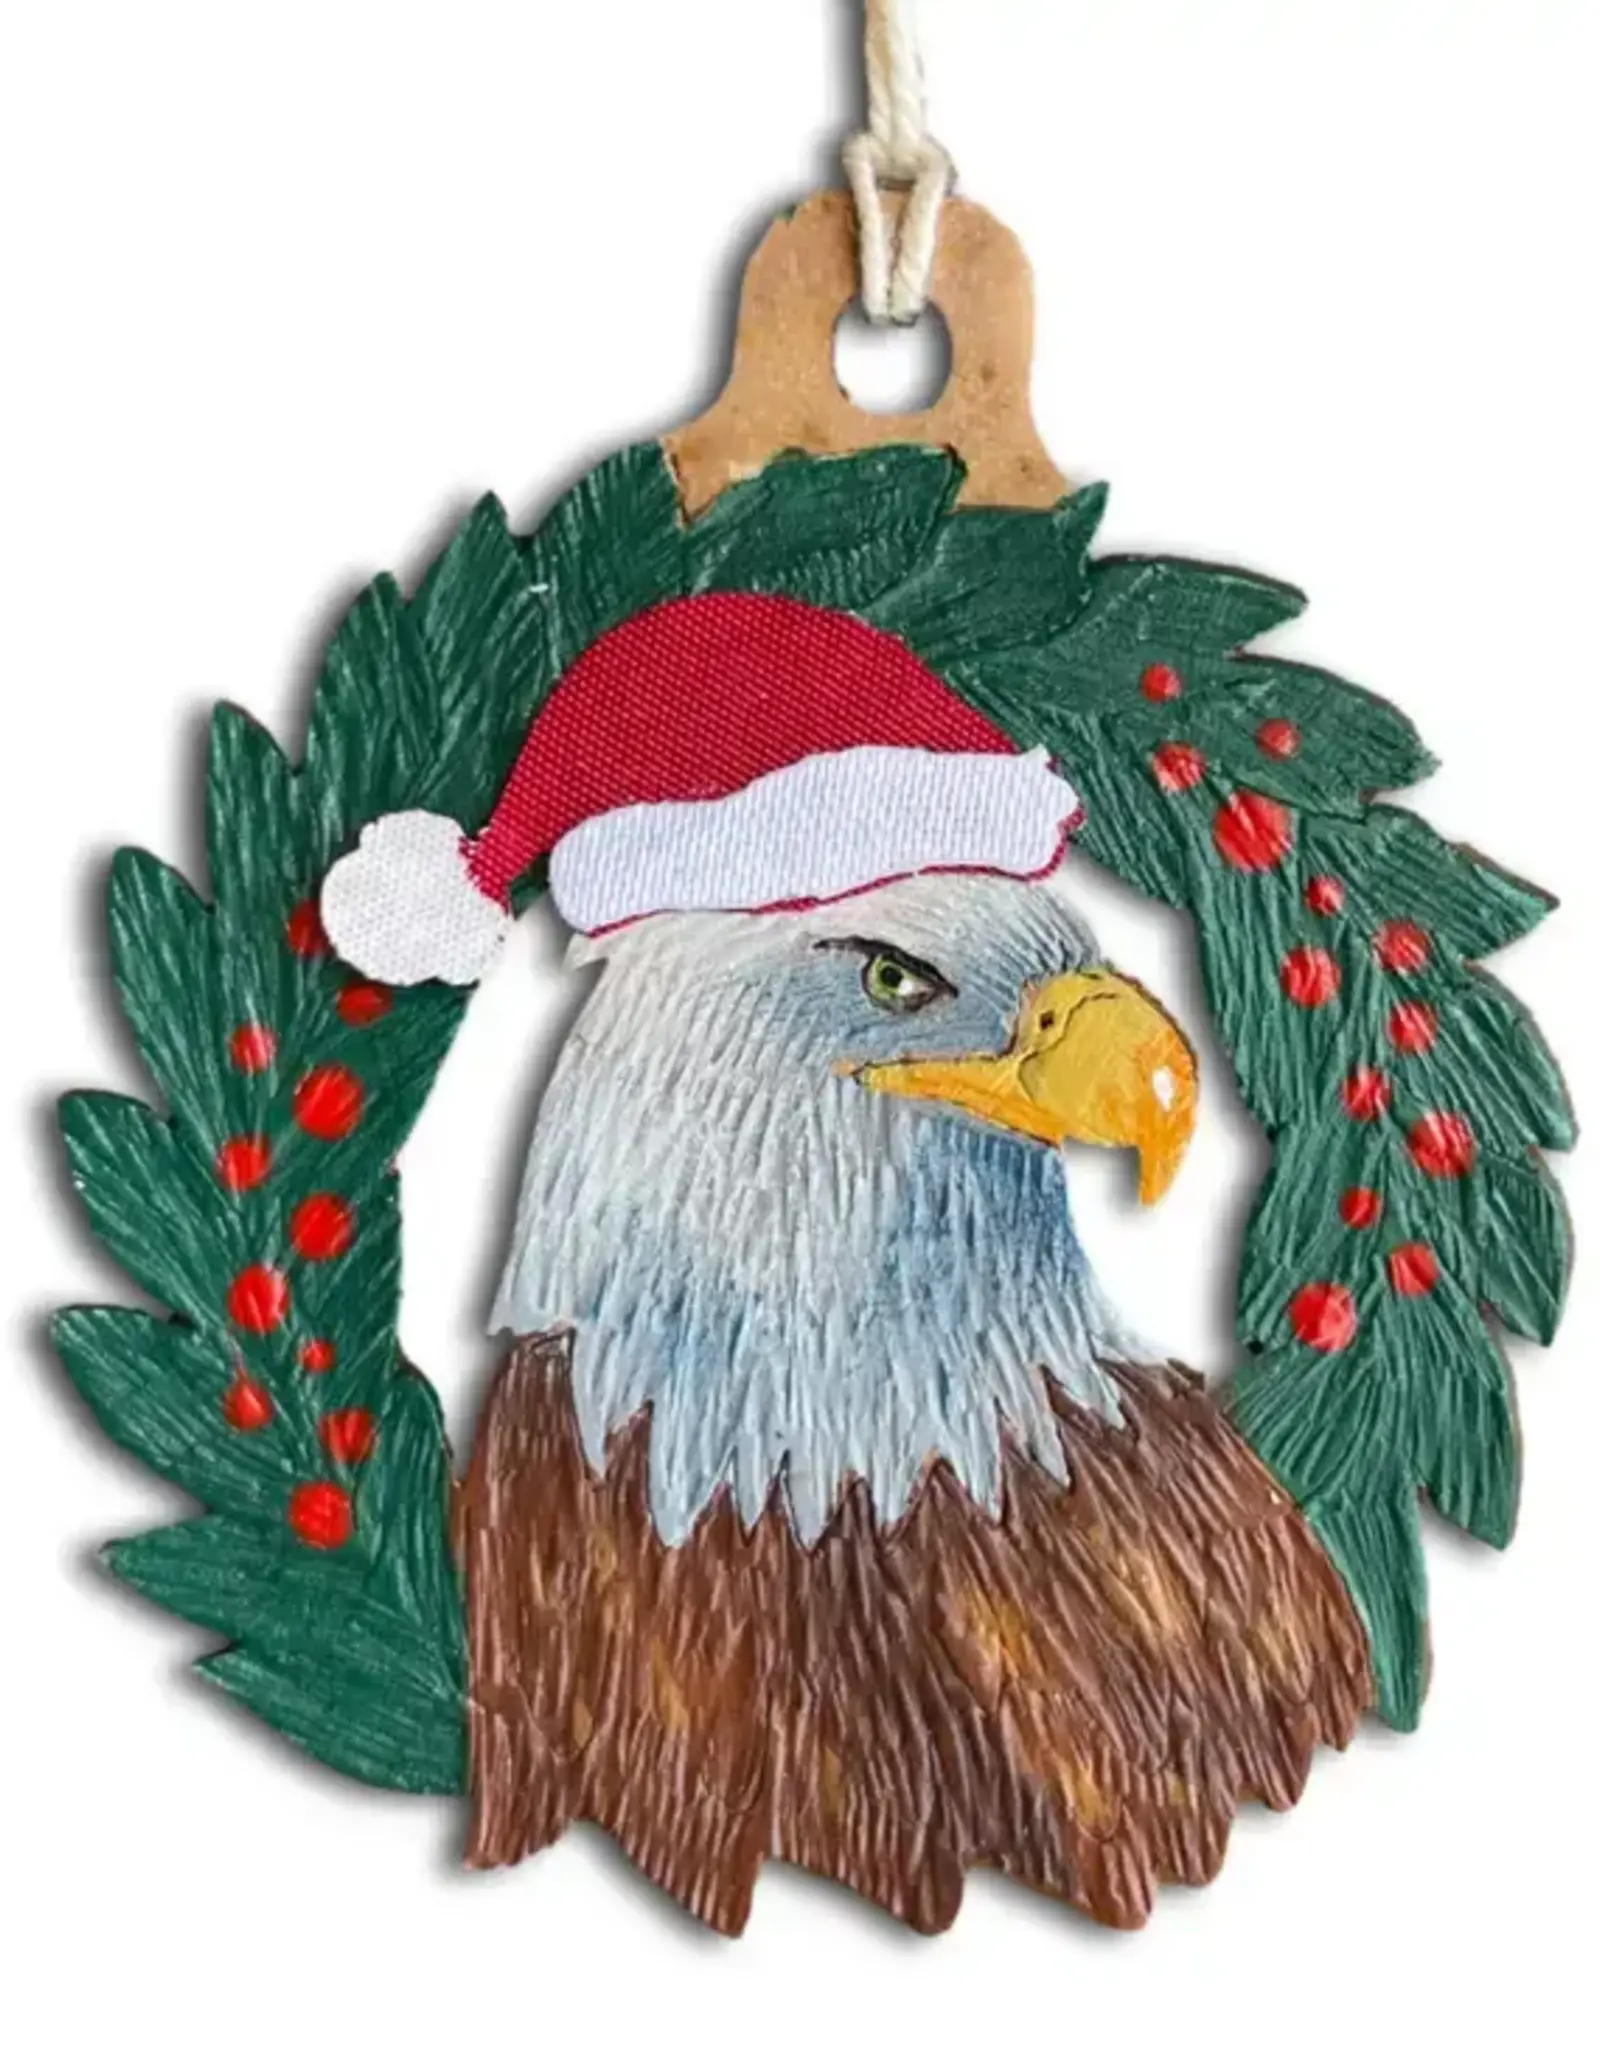 Tulia Artisans Eagle Christmas Ornament